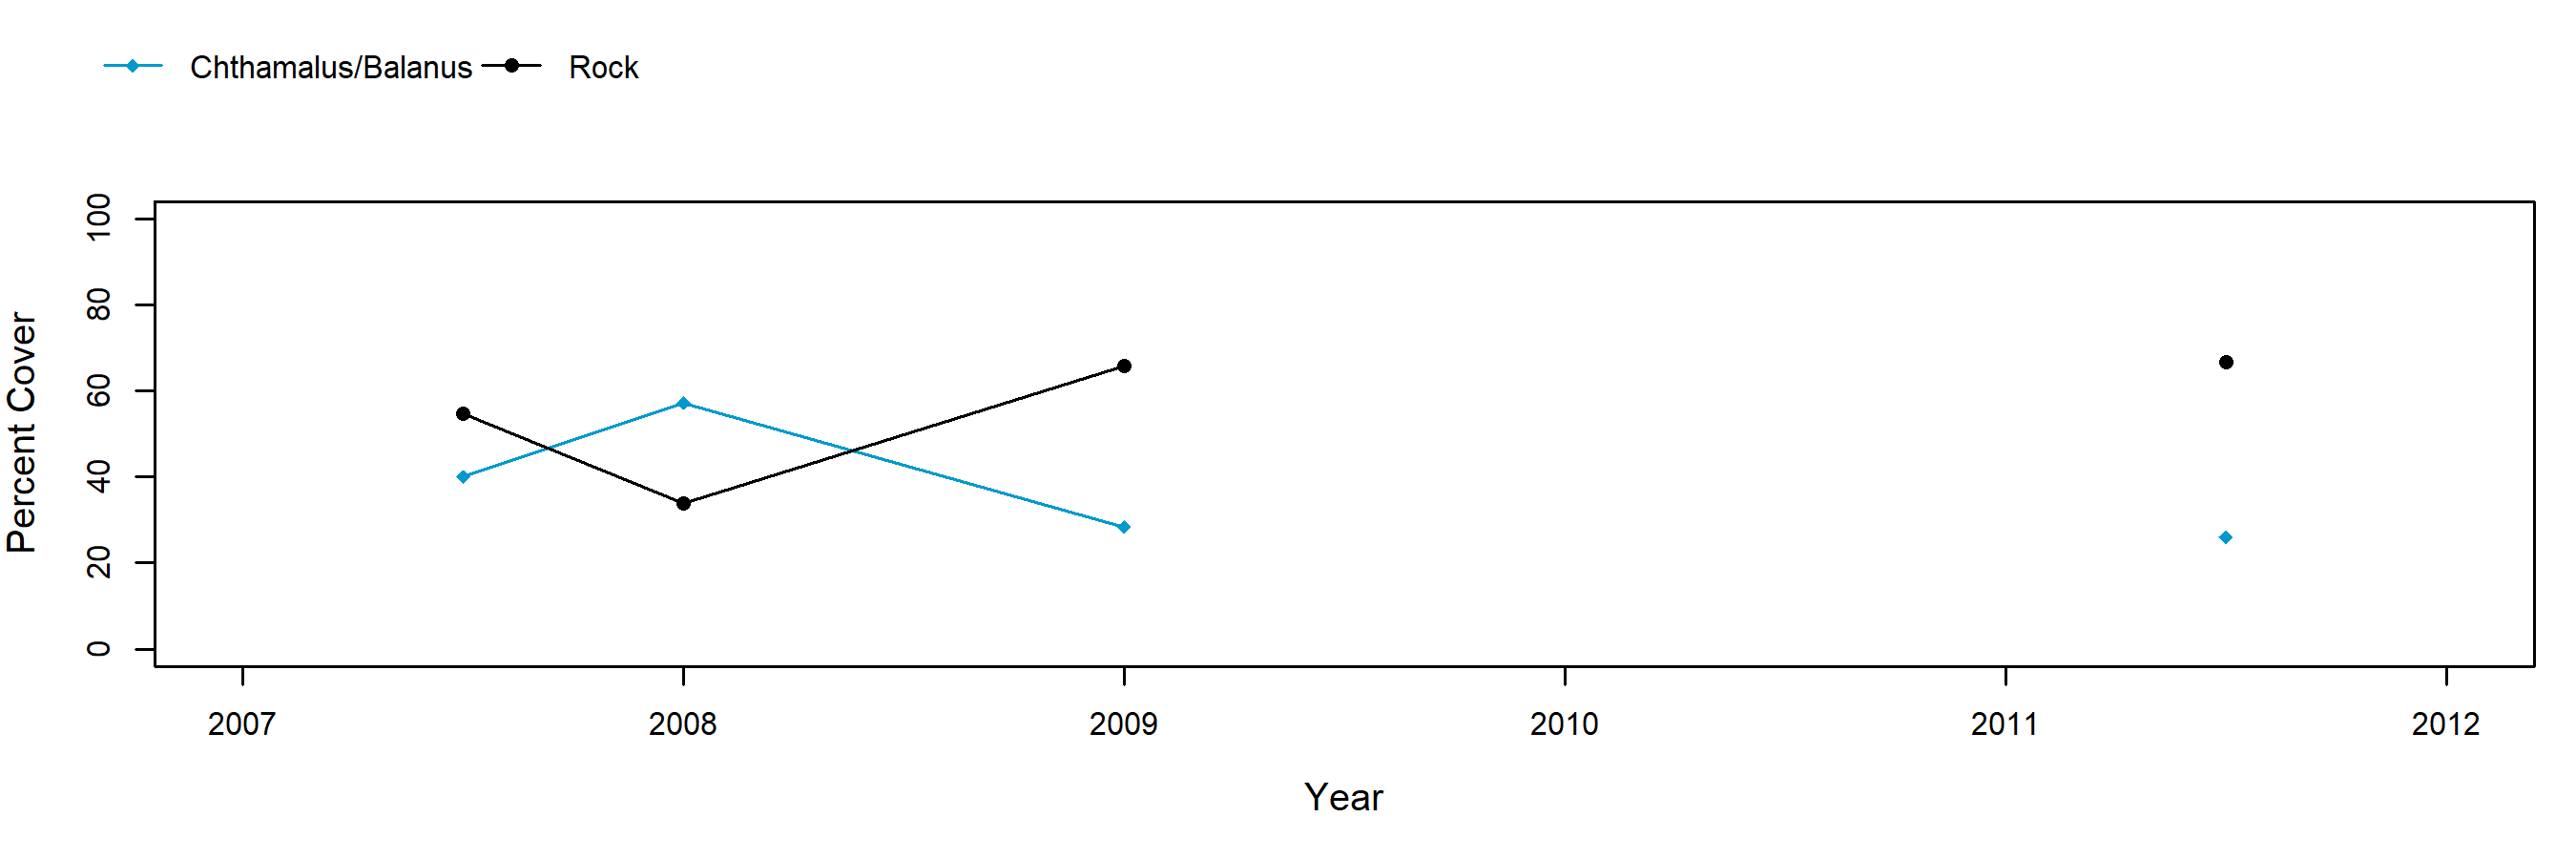 China Rocks barnacle trend plot